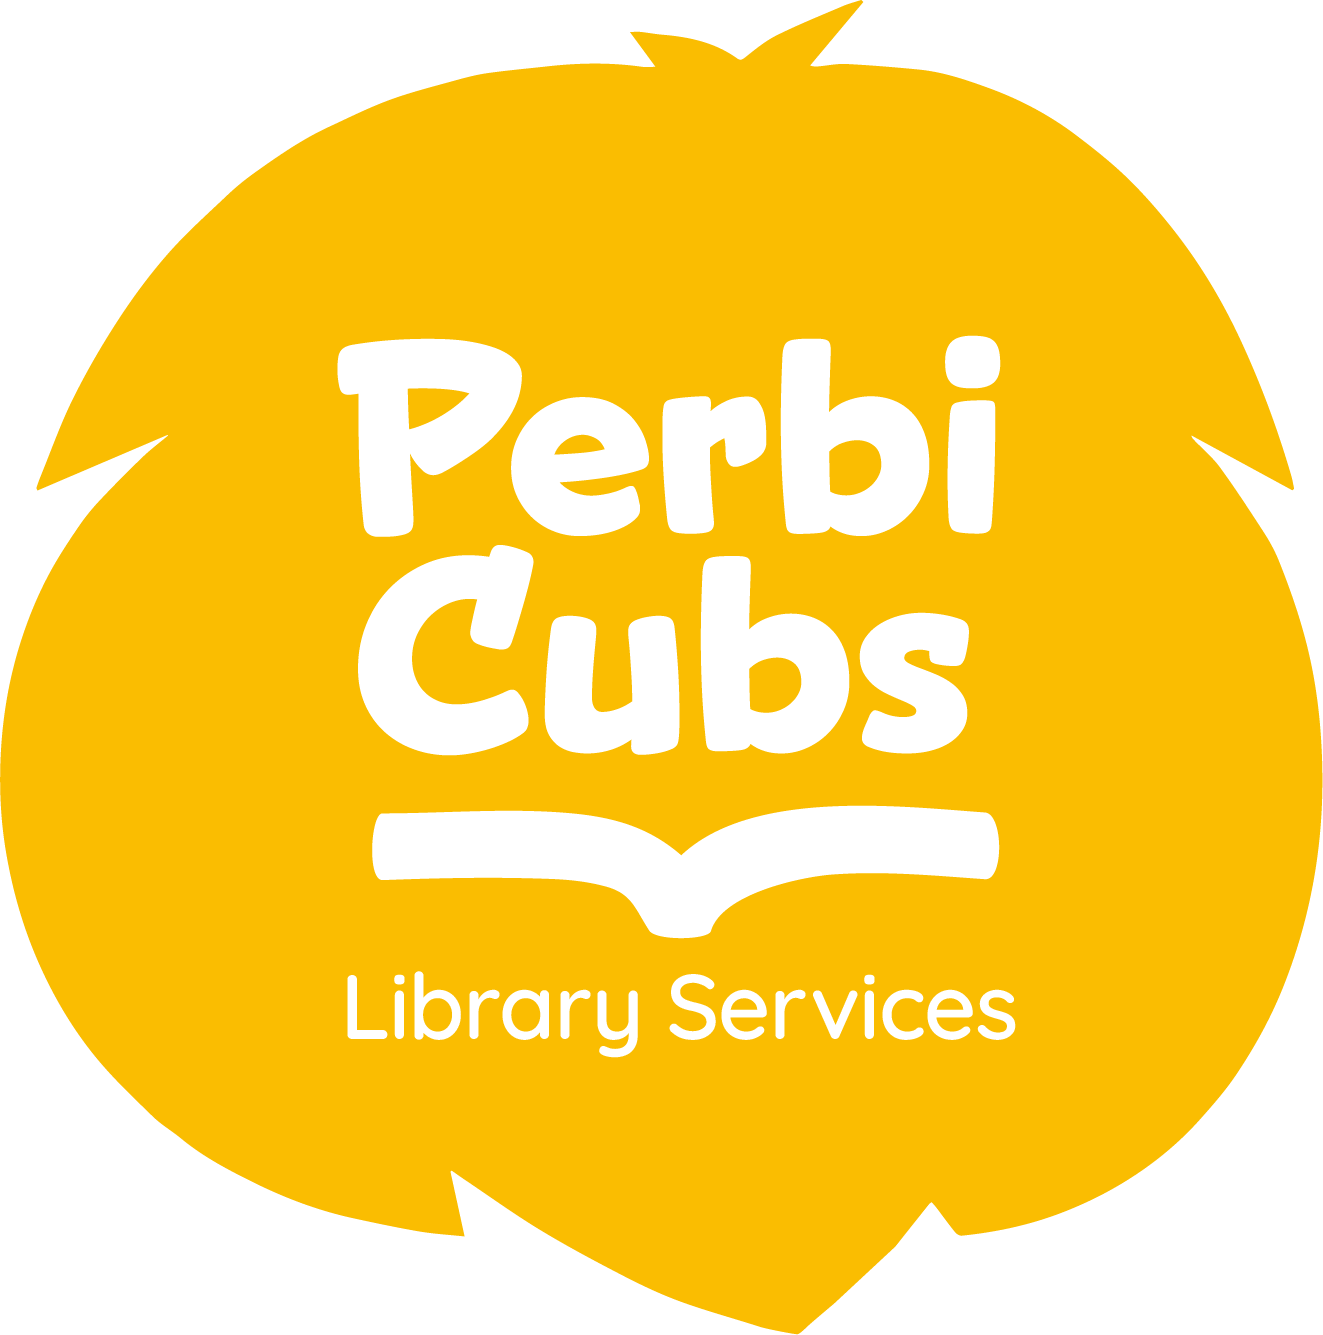 ThirdLaw branding and web design - Perbi Cubs - Logo